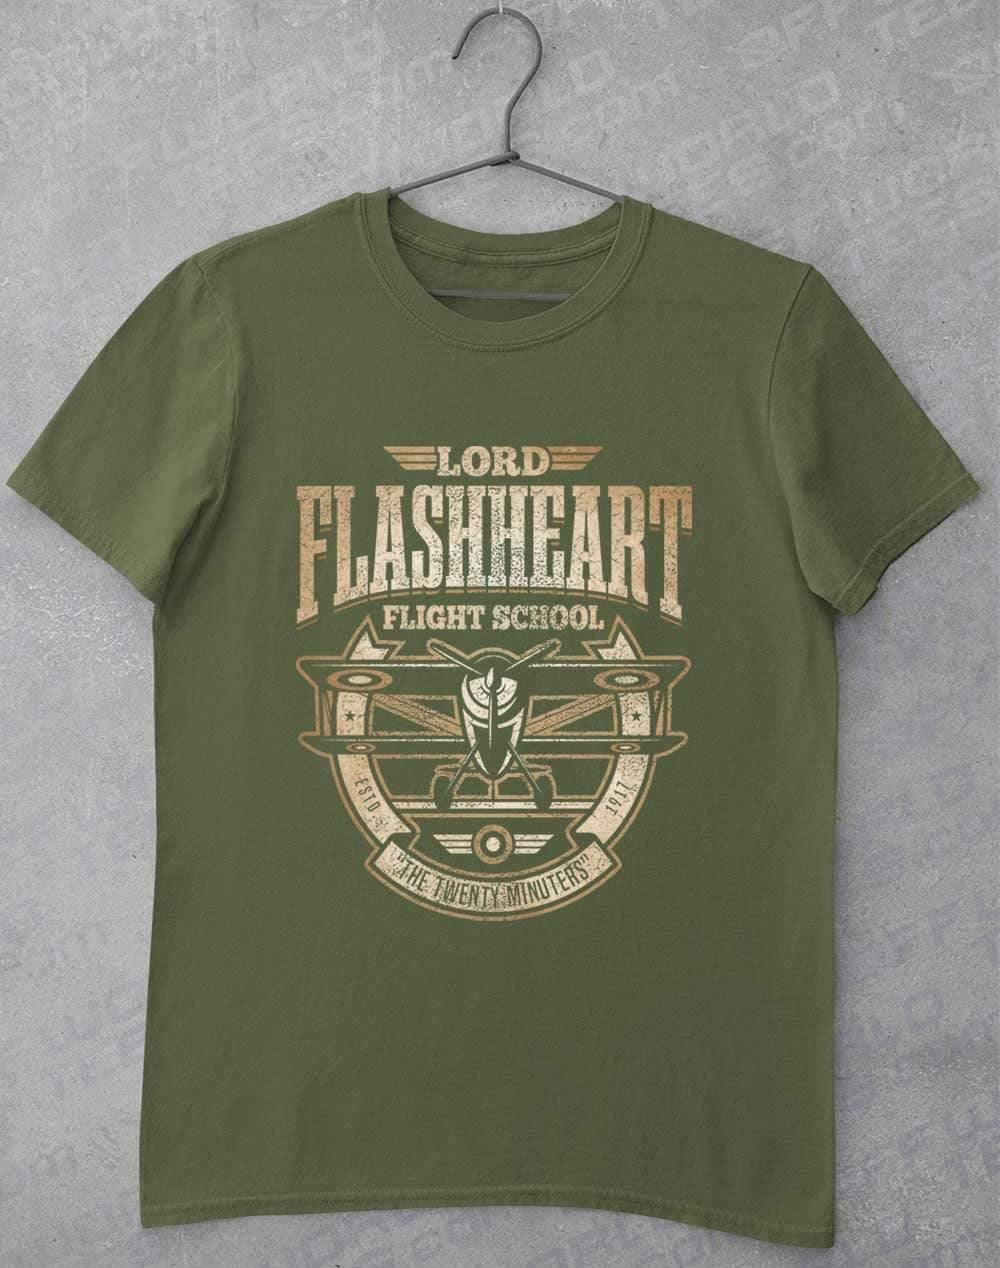 Flashheart's Flight School T-Shirt S / Military Green  - Off World Tees